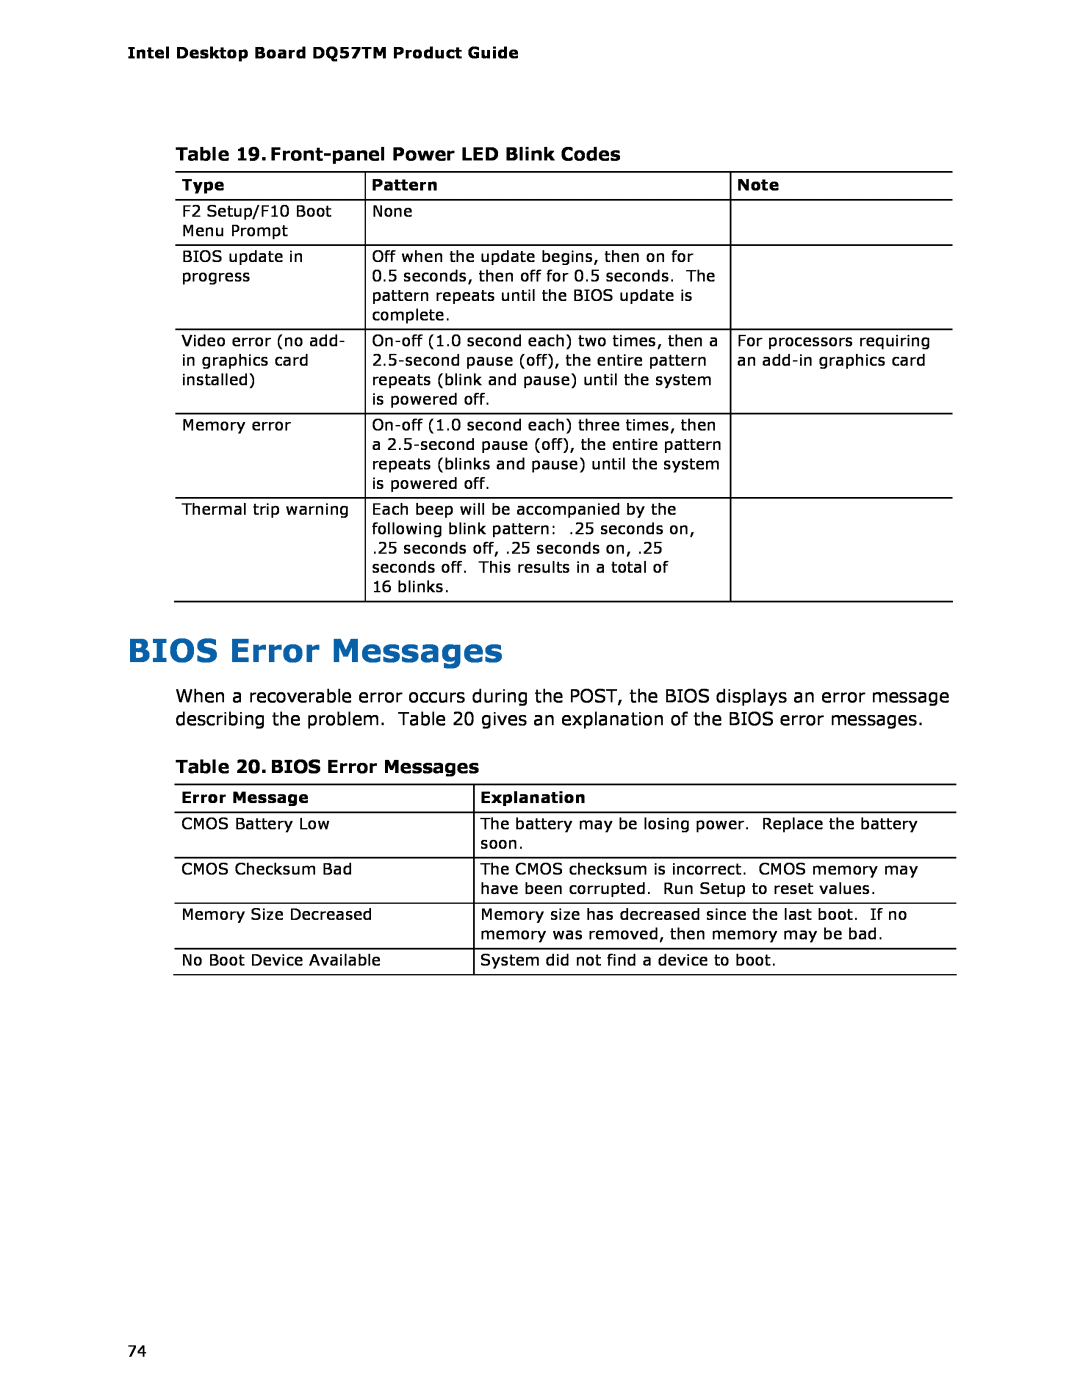 Intel DQ57TM manual BIOS Error Messages, Front-panelPower LED Blink Codes 